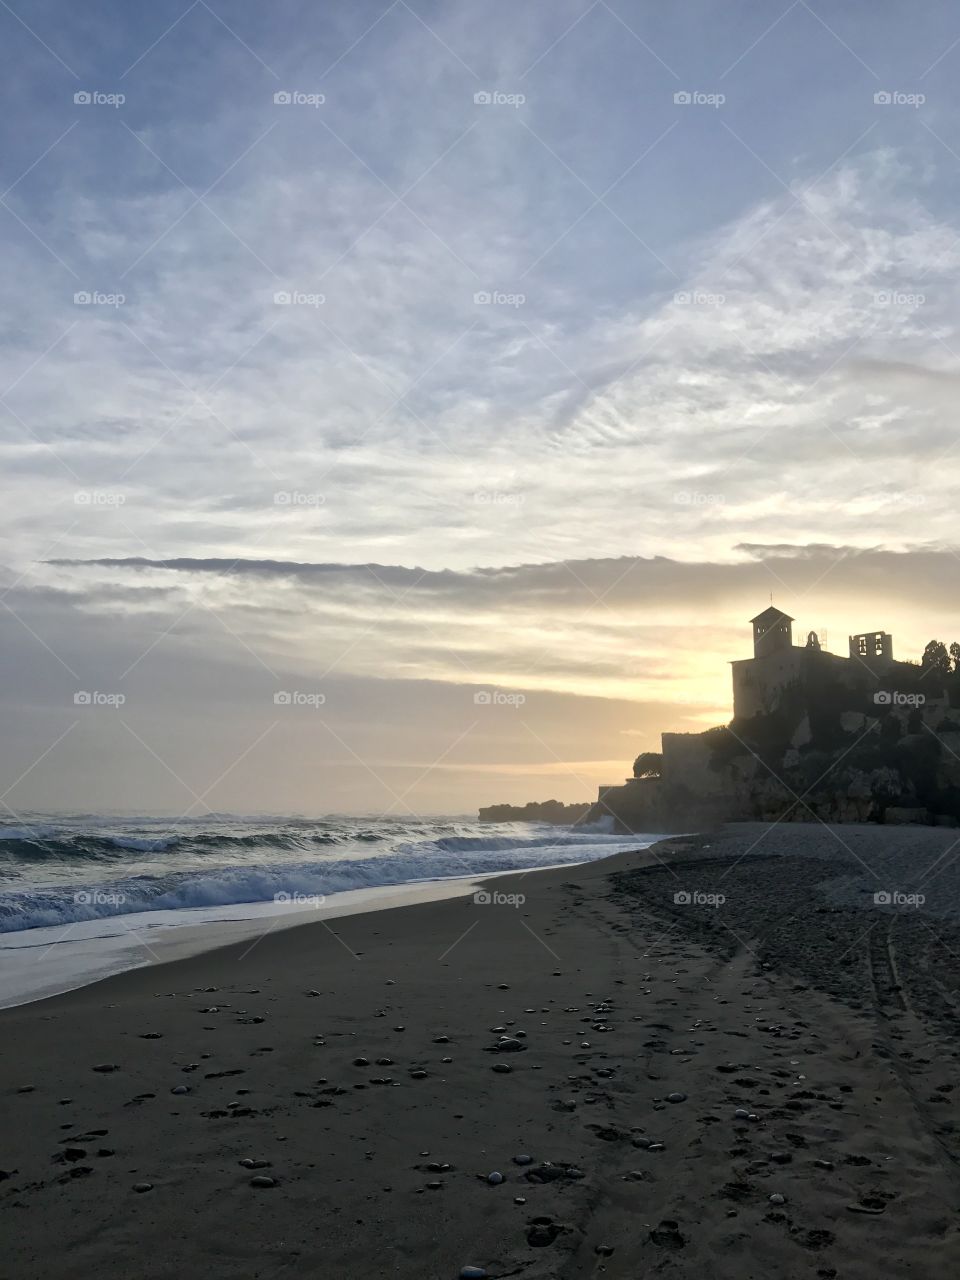 Tamarit Castle & Beach